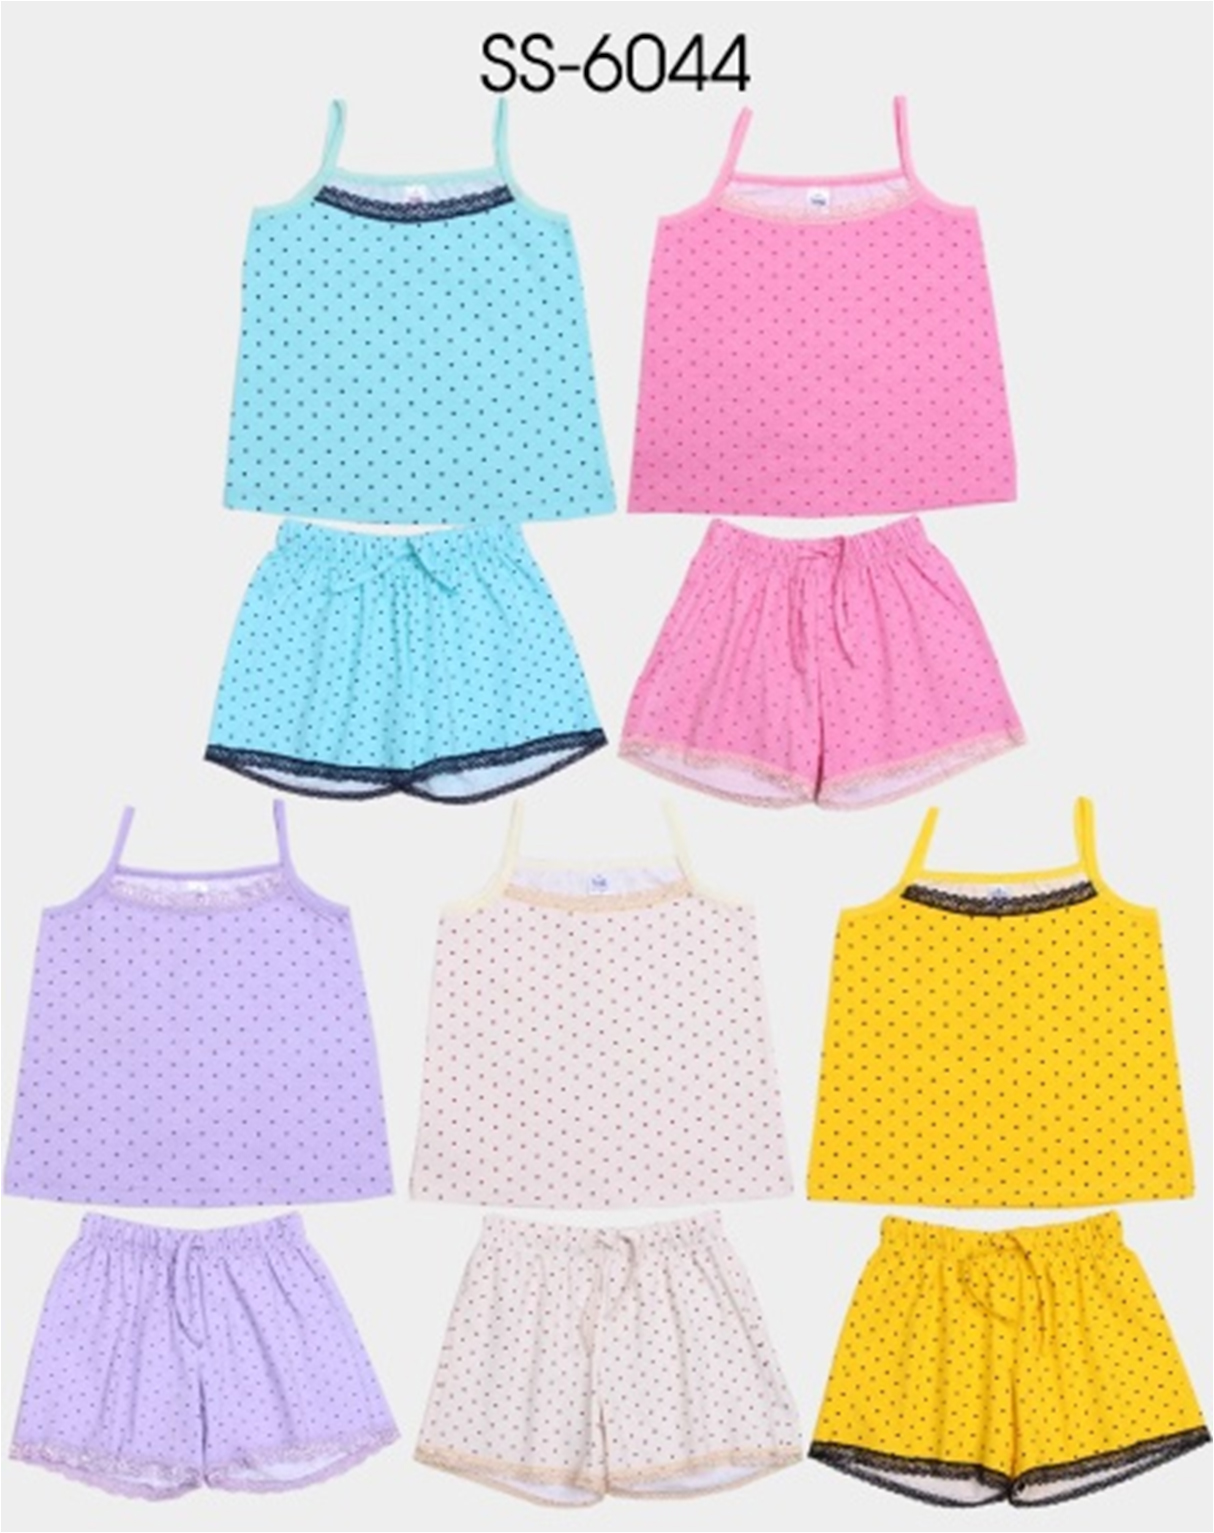 Пижама для девочки BONITO 6044 топ шорты Текстиль Центр 